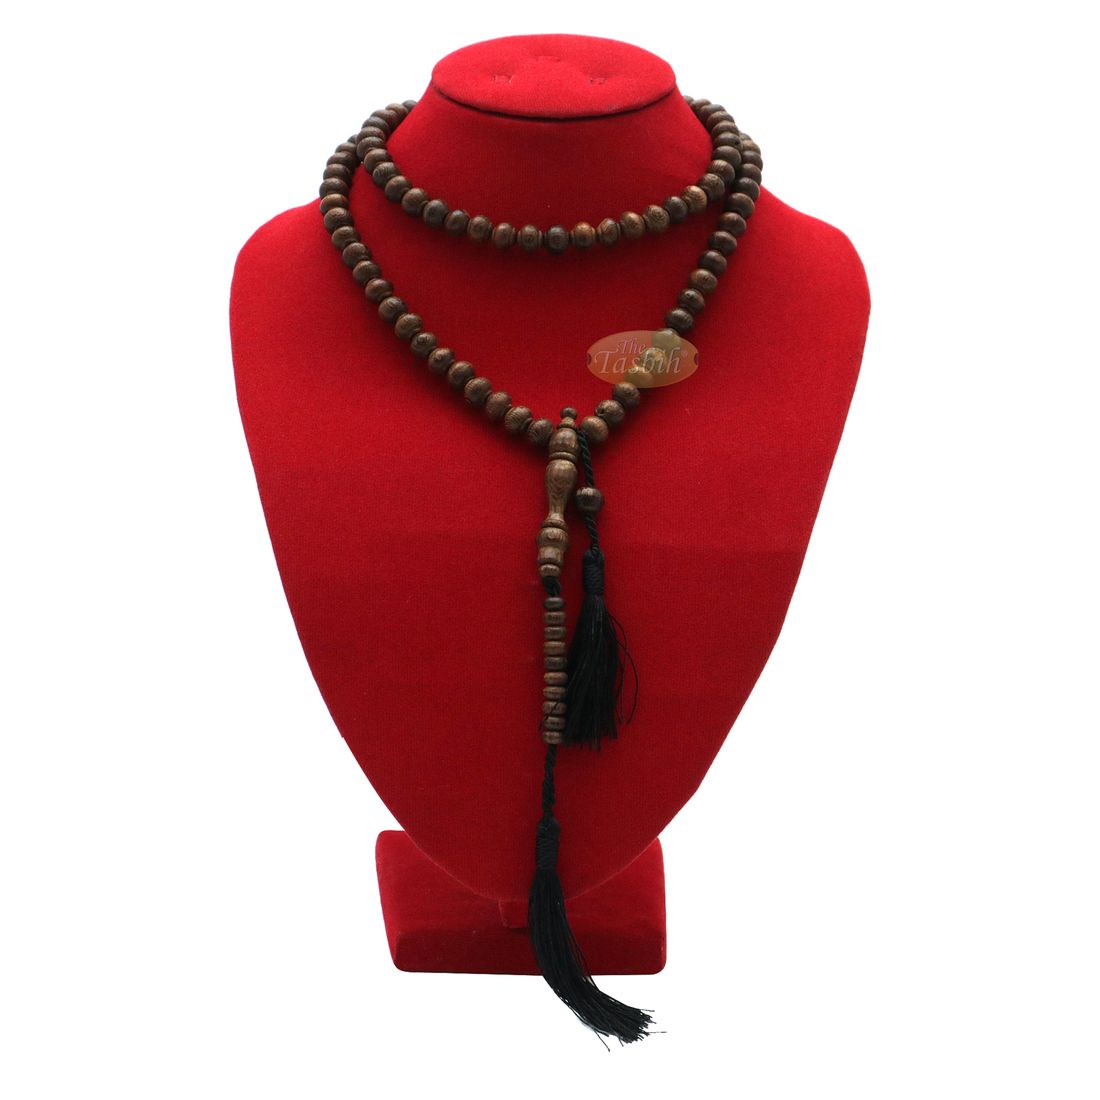 Wooden Islamic Prayer Beads – Natural Johar Asian Wenge Wood Tasbih 99ct Contoured 8x7mm Beads with Black Tassels in GIFT BOX